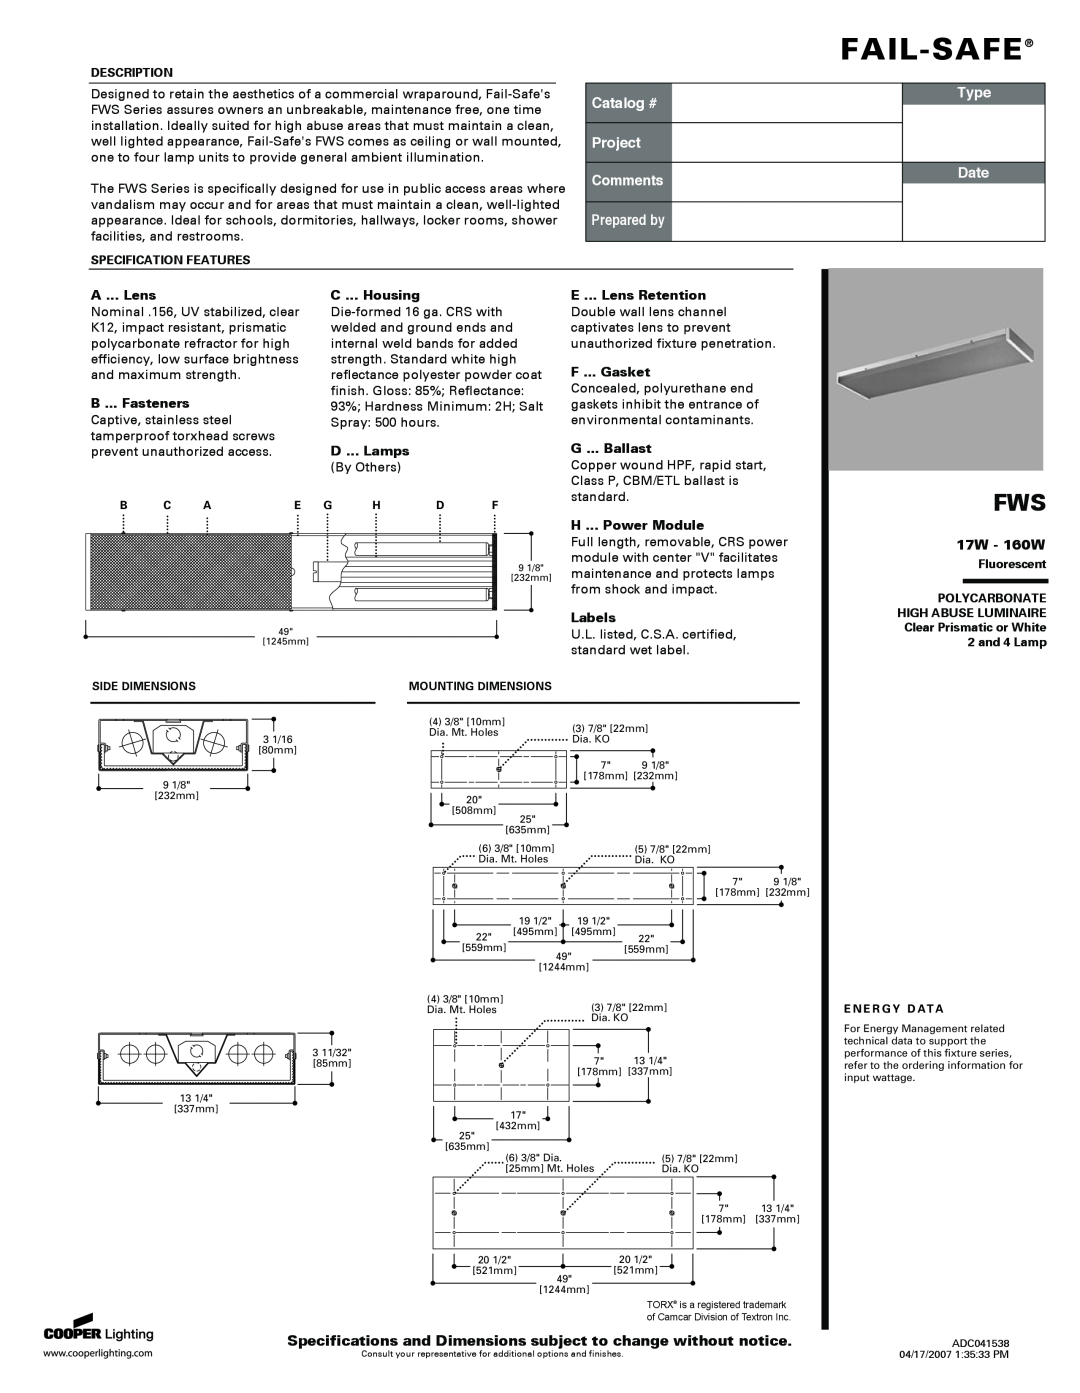 Cooper Lighting FWS specifications A ... Lens, B ... Fasteners, C ... Housing, D ... Lamps, E ... Lens Retention, Labels 